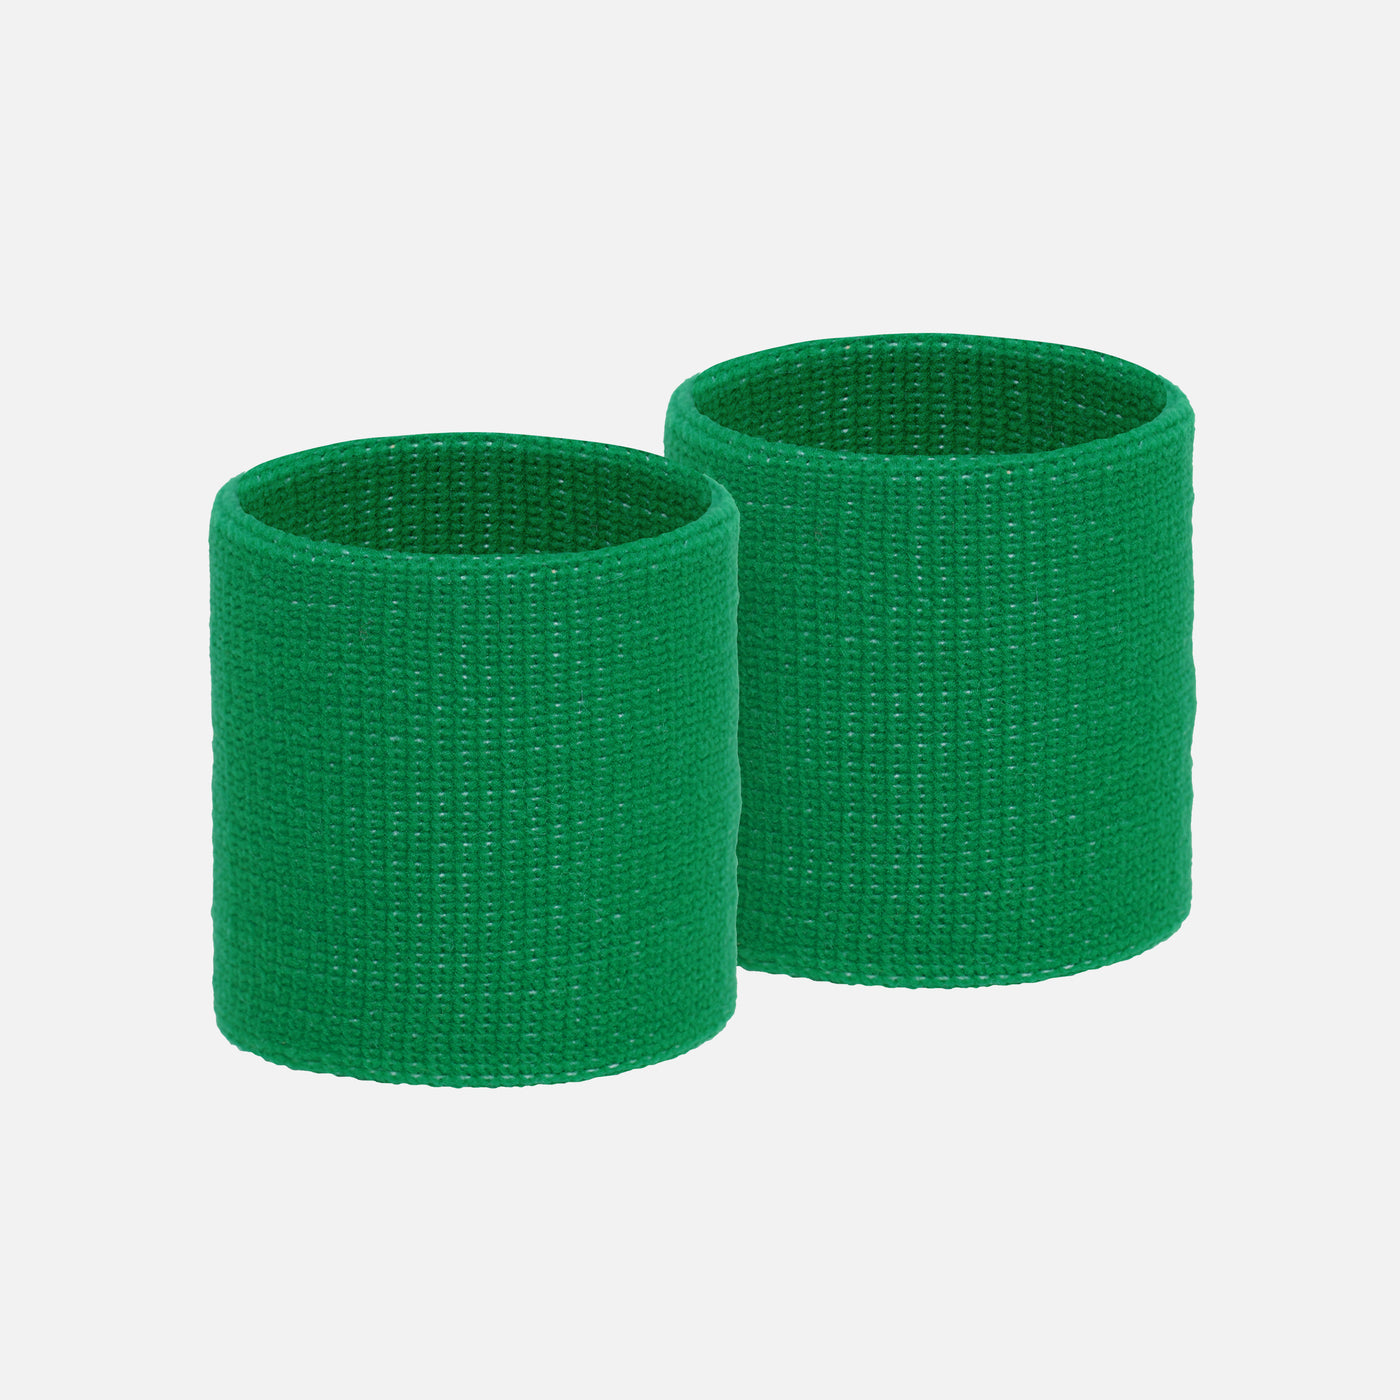 Hue Dark Green Cotton Wristbands (Pair)